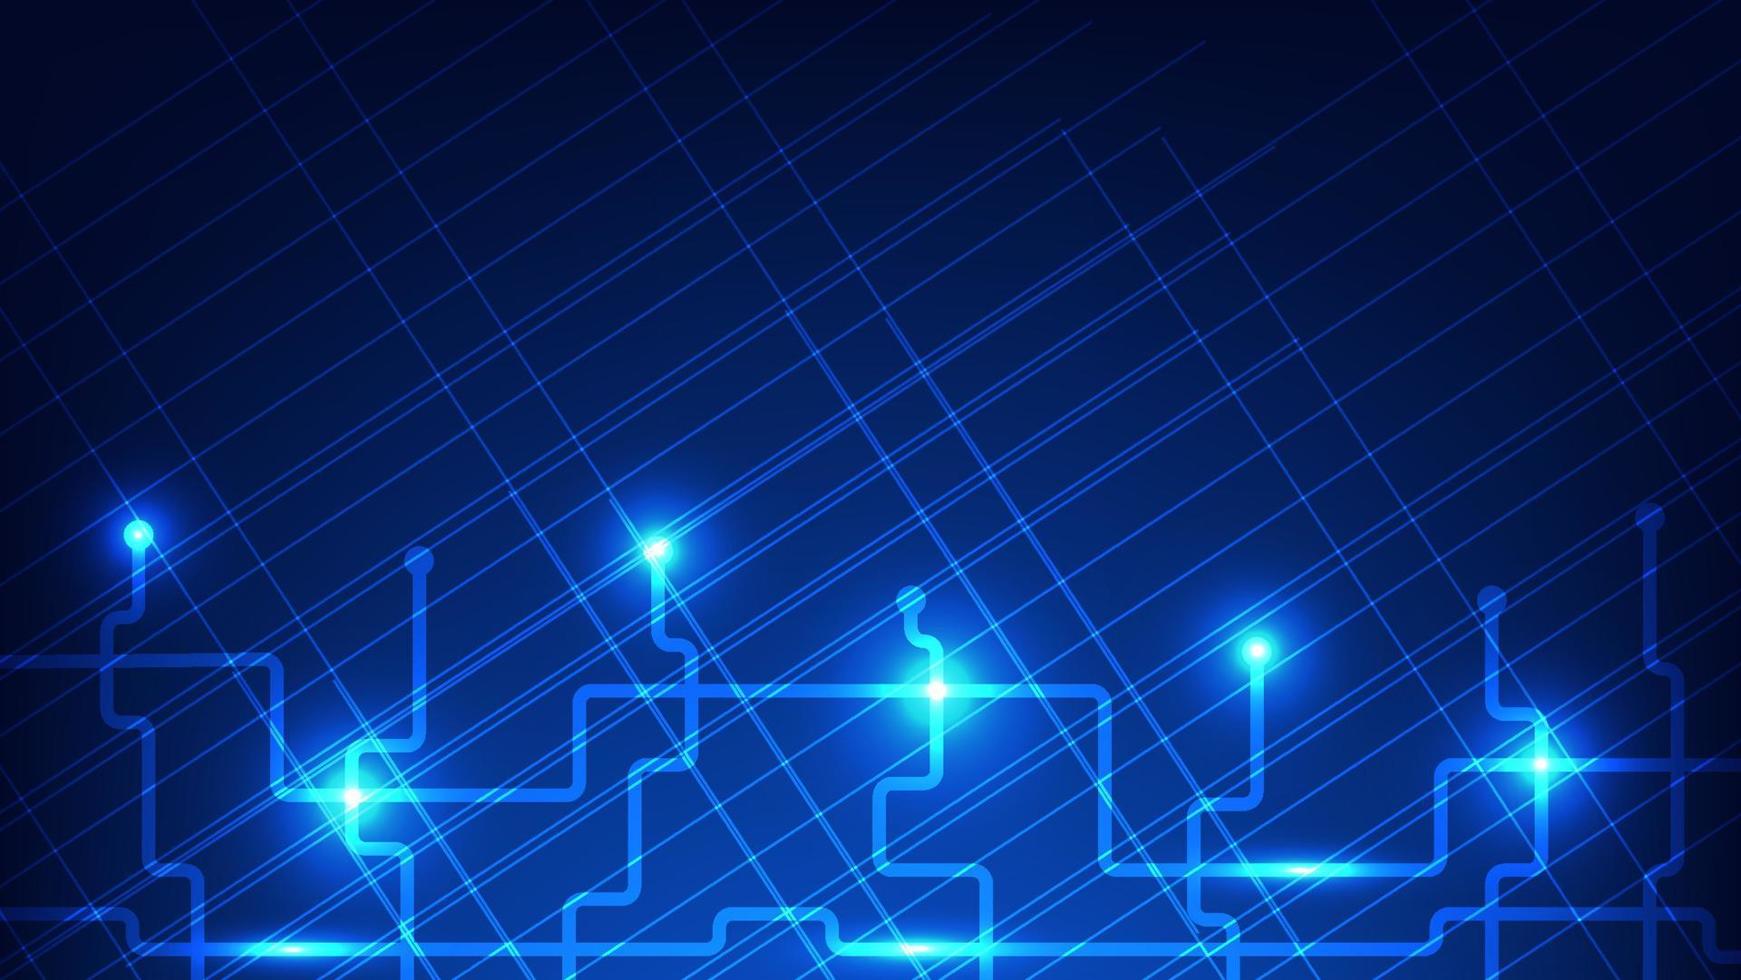 tecnología digital de alta tecnología y concepto de fondo de comunicación futurista. líneas de conexión eléctricas como red con iluminación azul vector